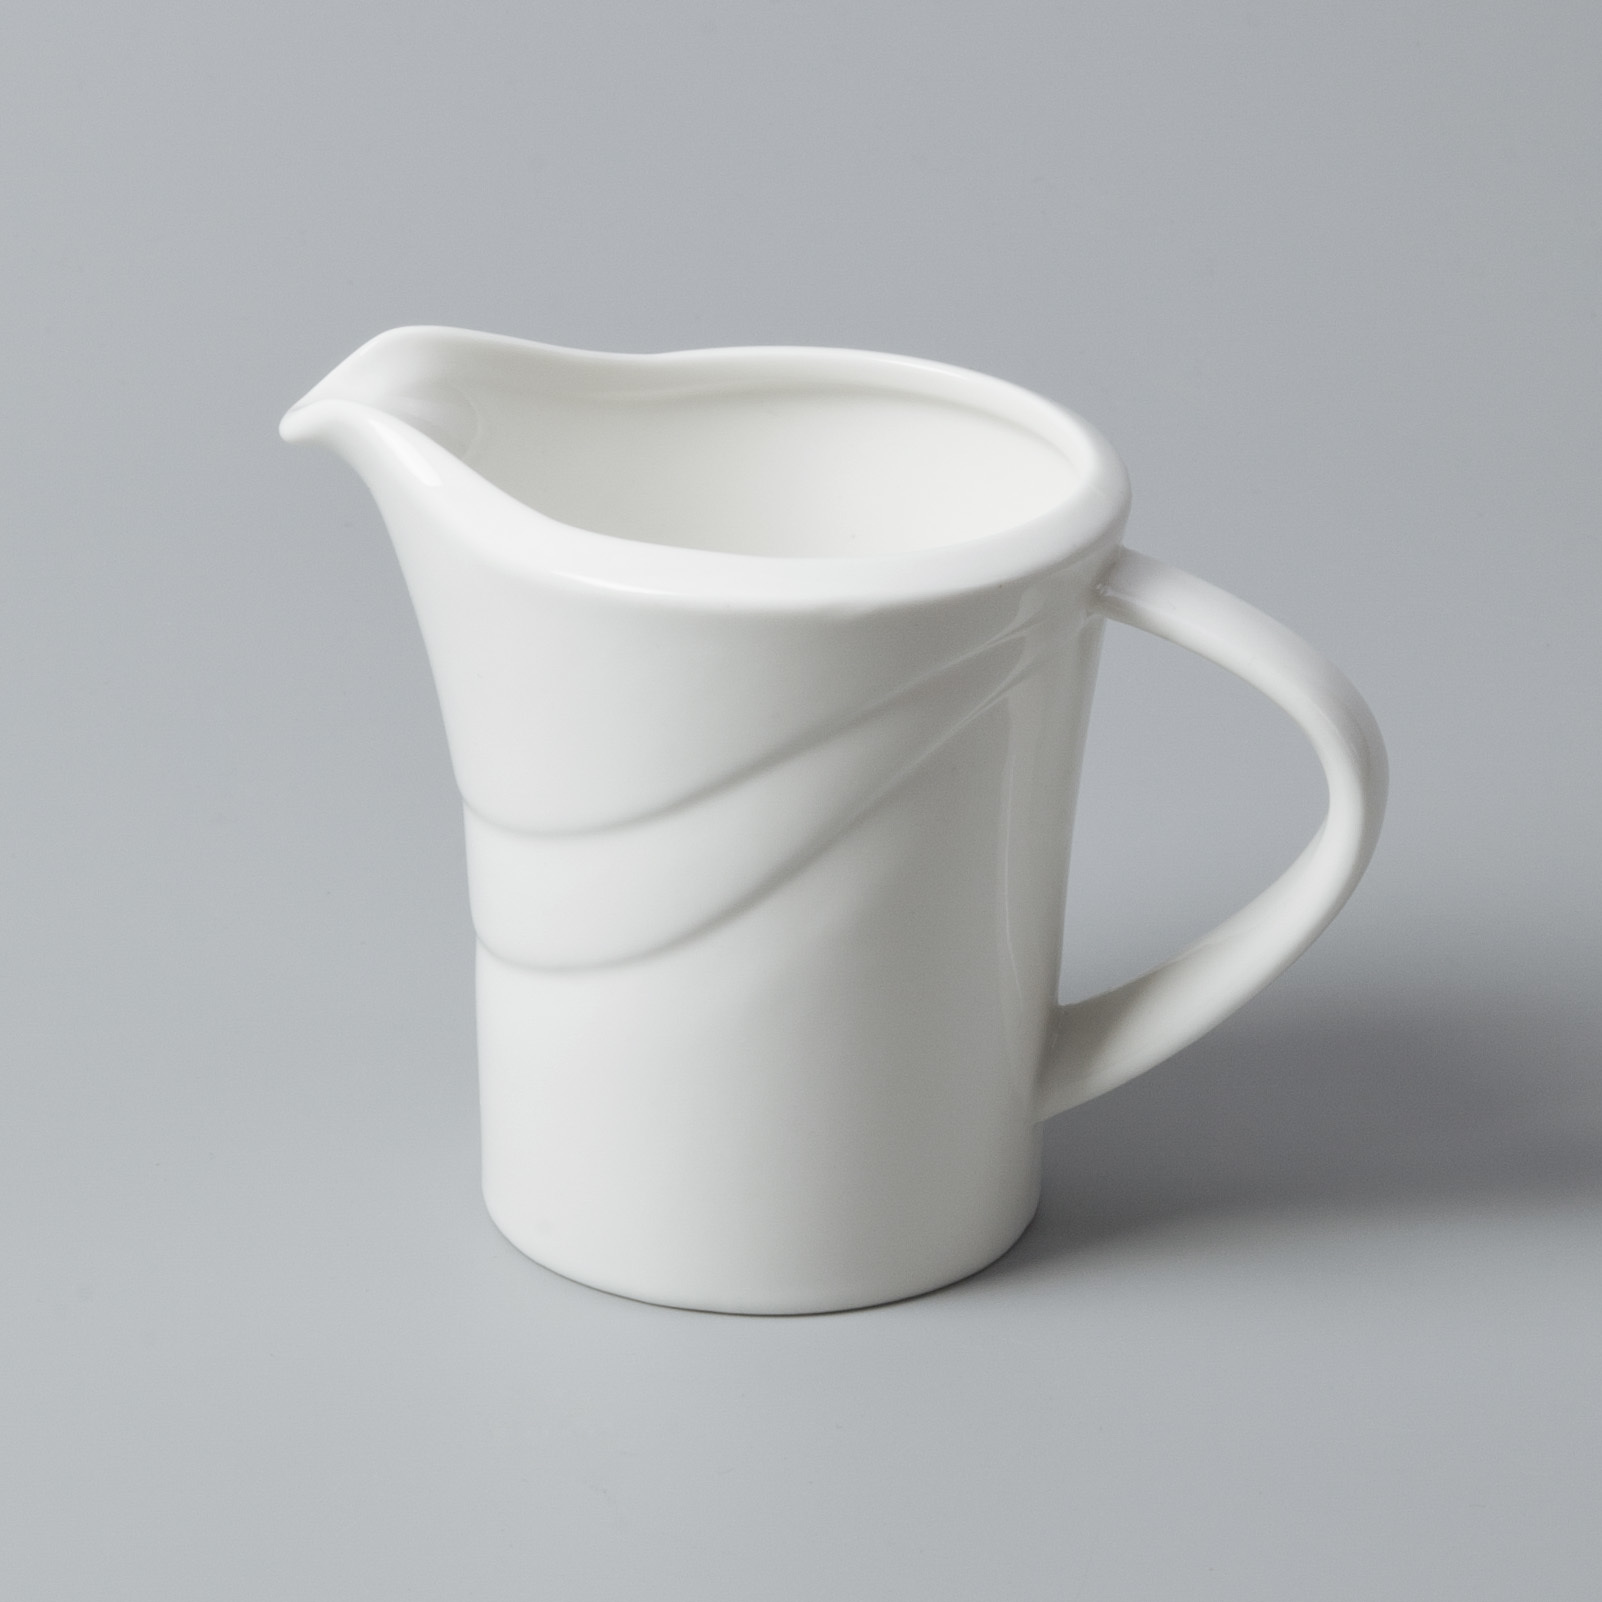 Hot white porcelain tableware embossed Two Eight Brand